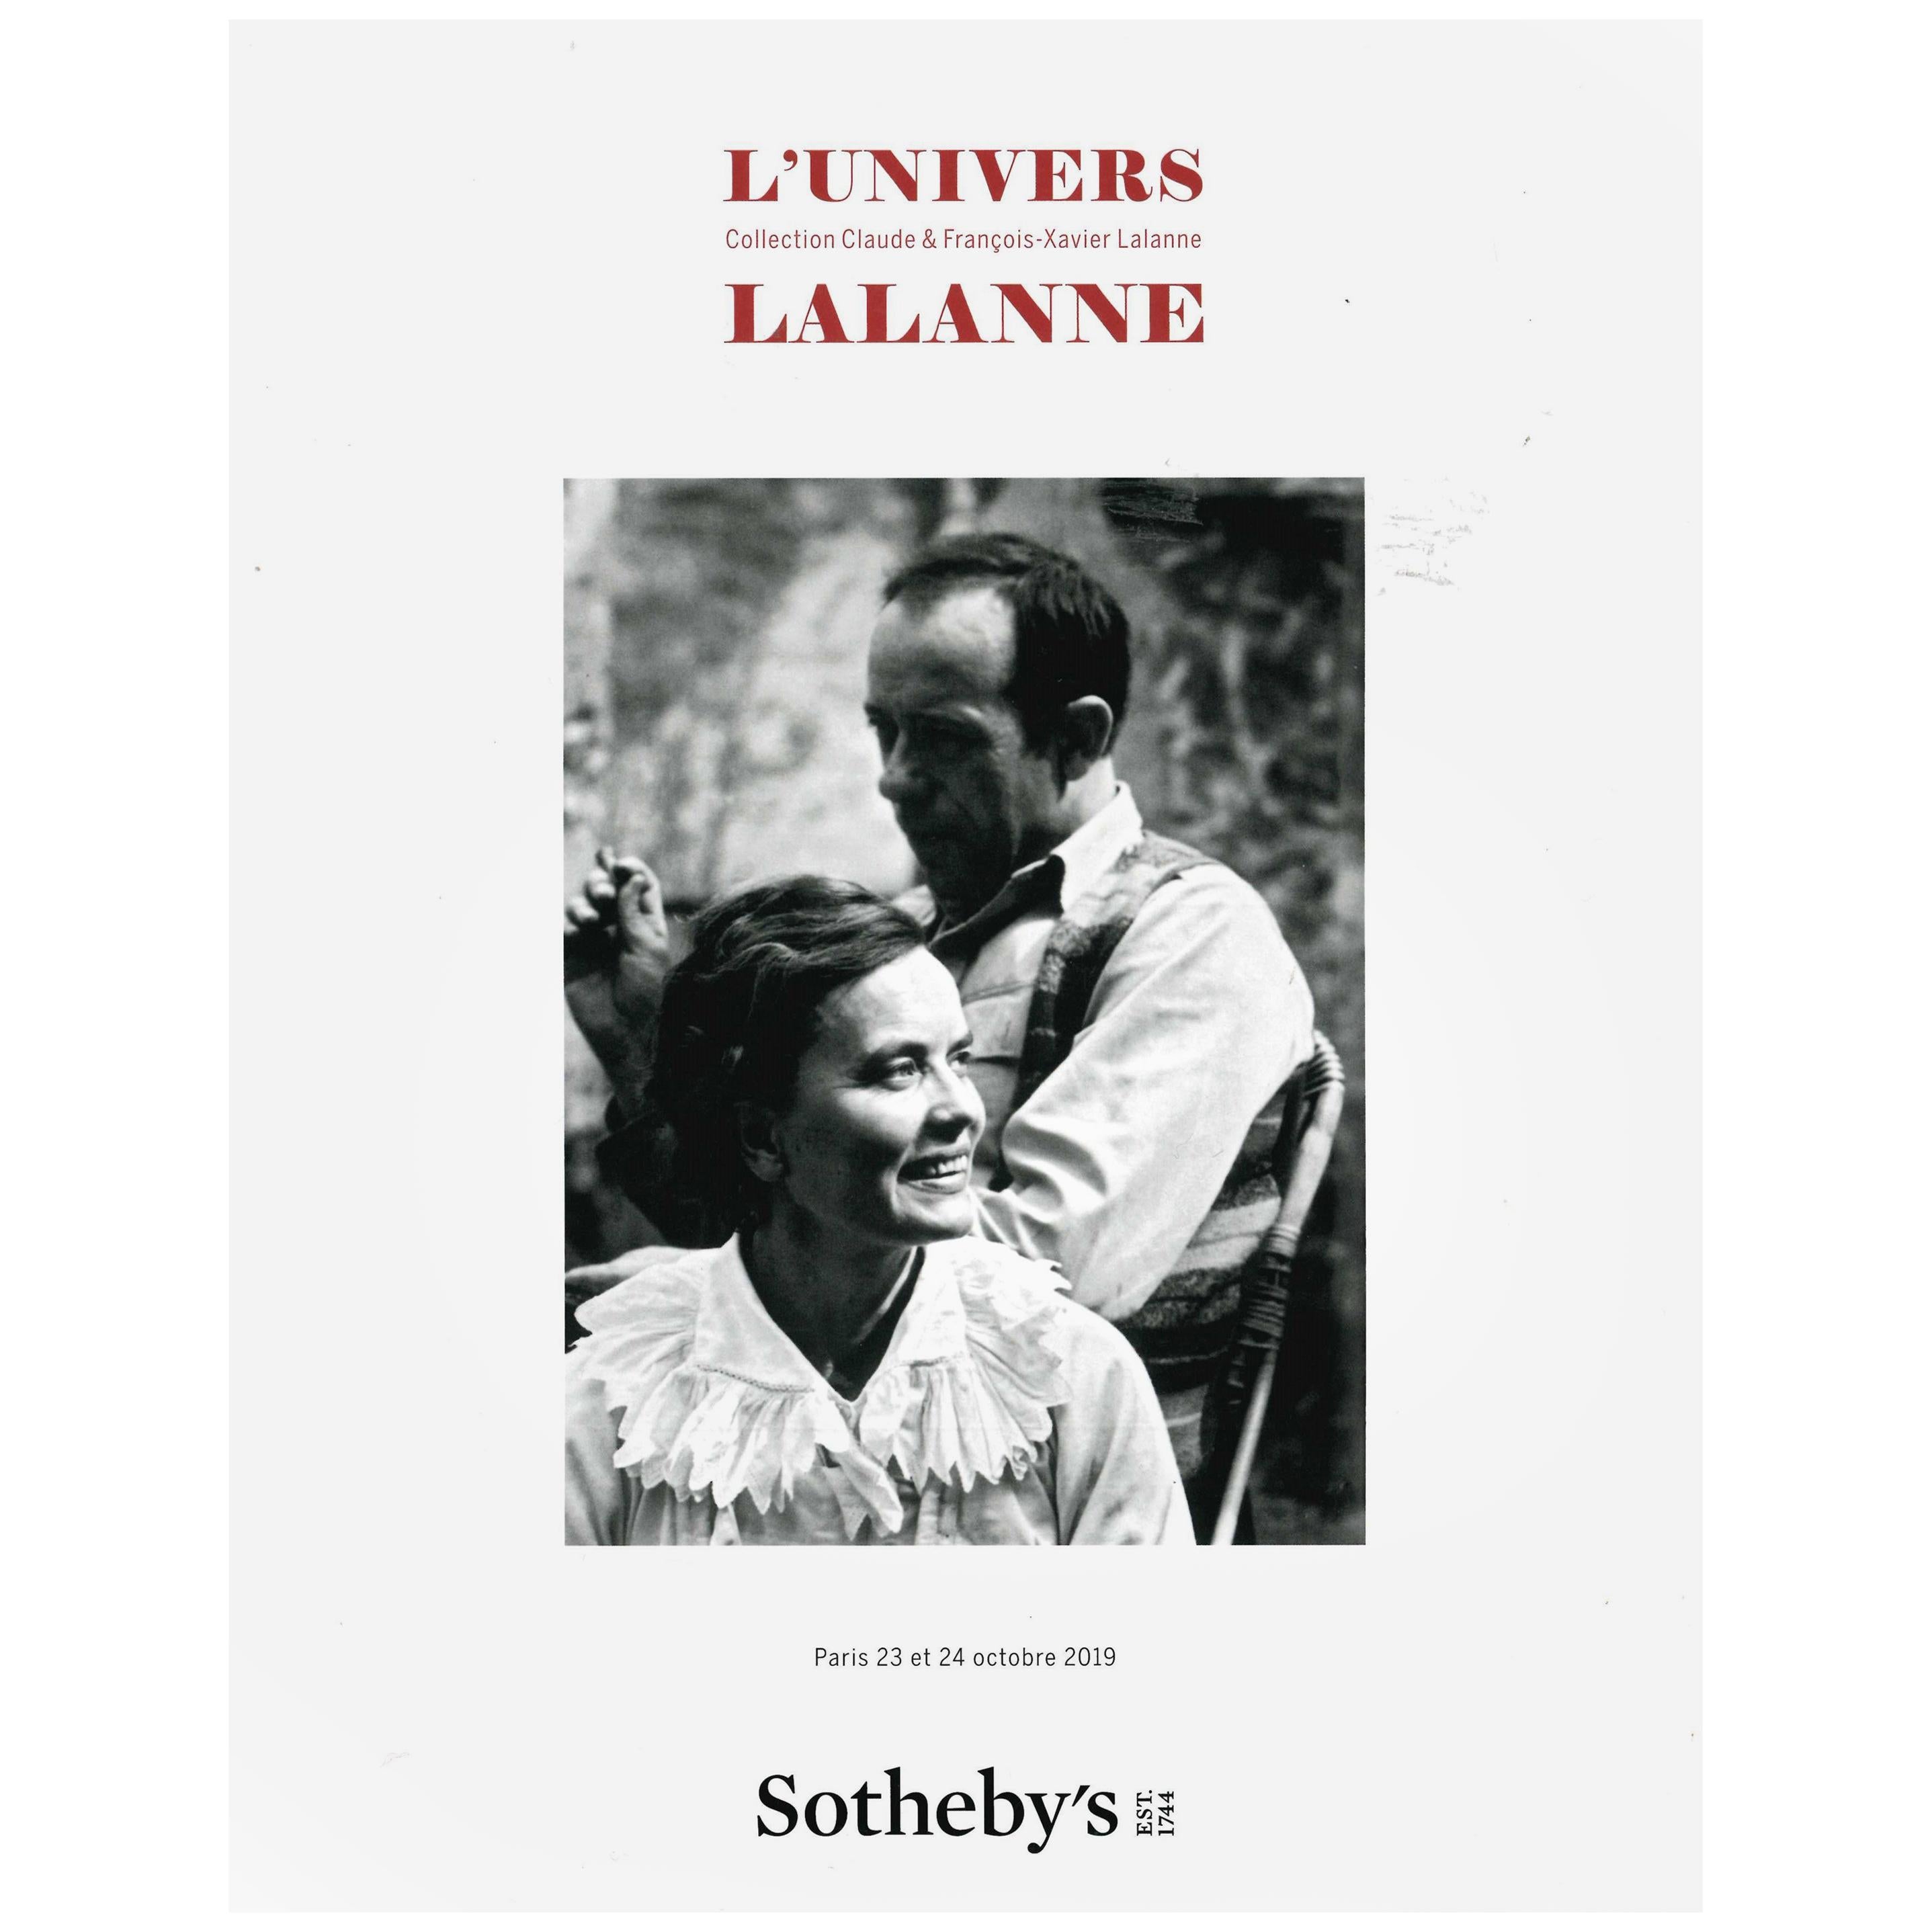 L'univers Lalanne, Collection Claude & Francois-Xavier Lalanne, Sotheby's, 2019